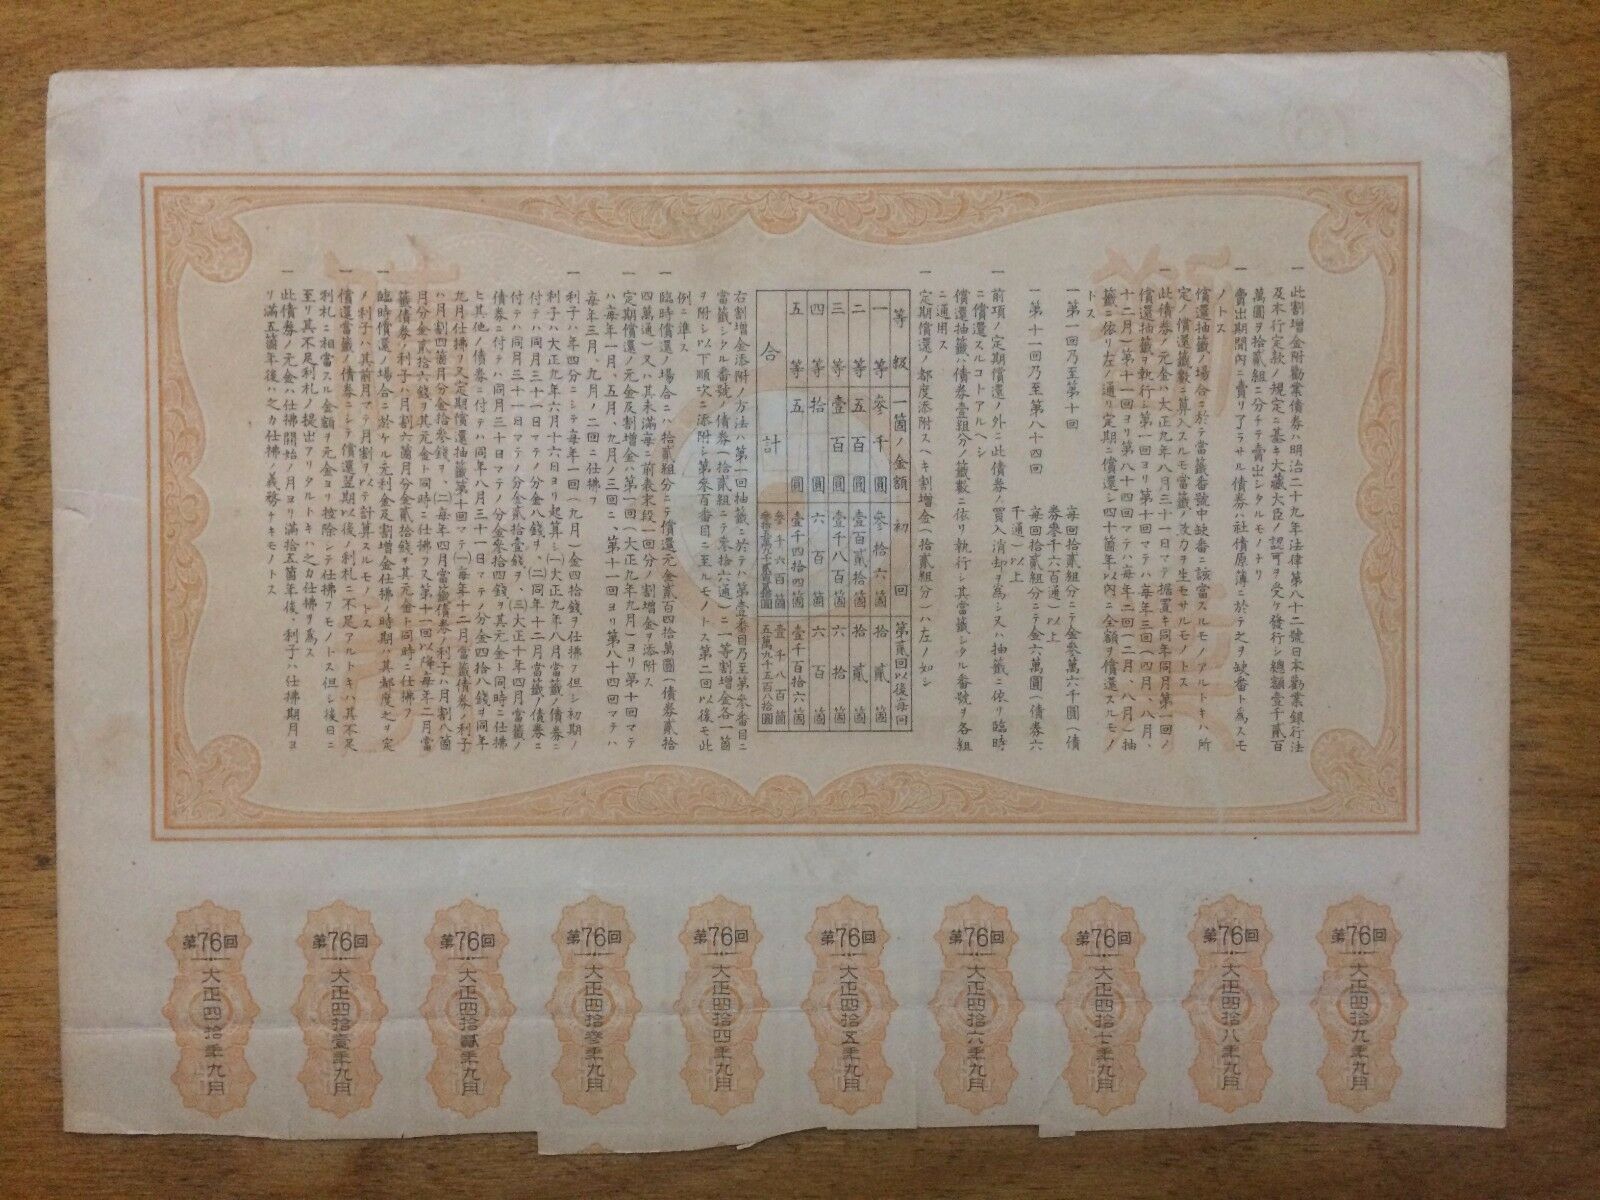 JAPAN HYPOTHEC BANK BOND YEN 10 of 920 TYPE PRECEDING SCHWAN BOLING LISTING CIRC